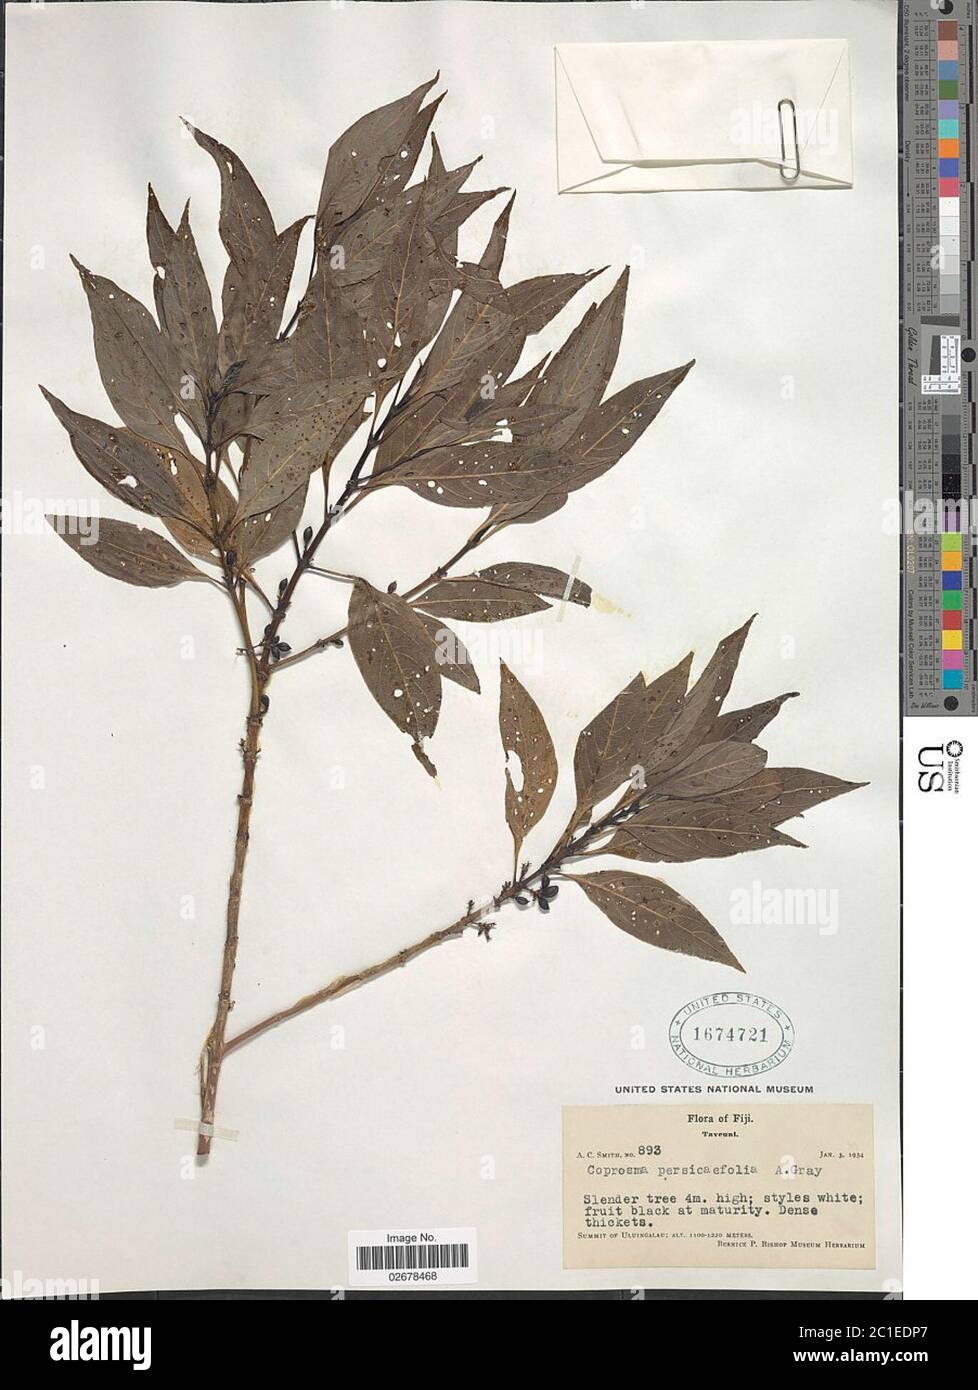 Coprosma persicaefolia A Gray Coprosma persicaefolia A Gray. Stock Photo